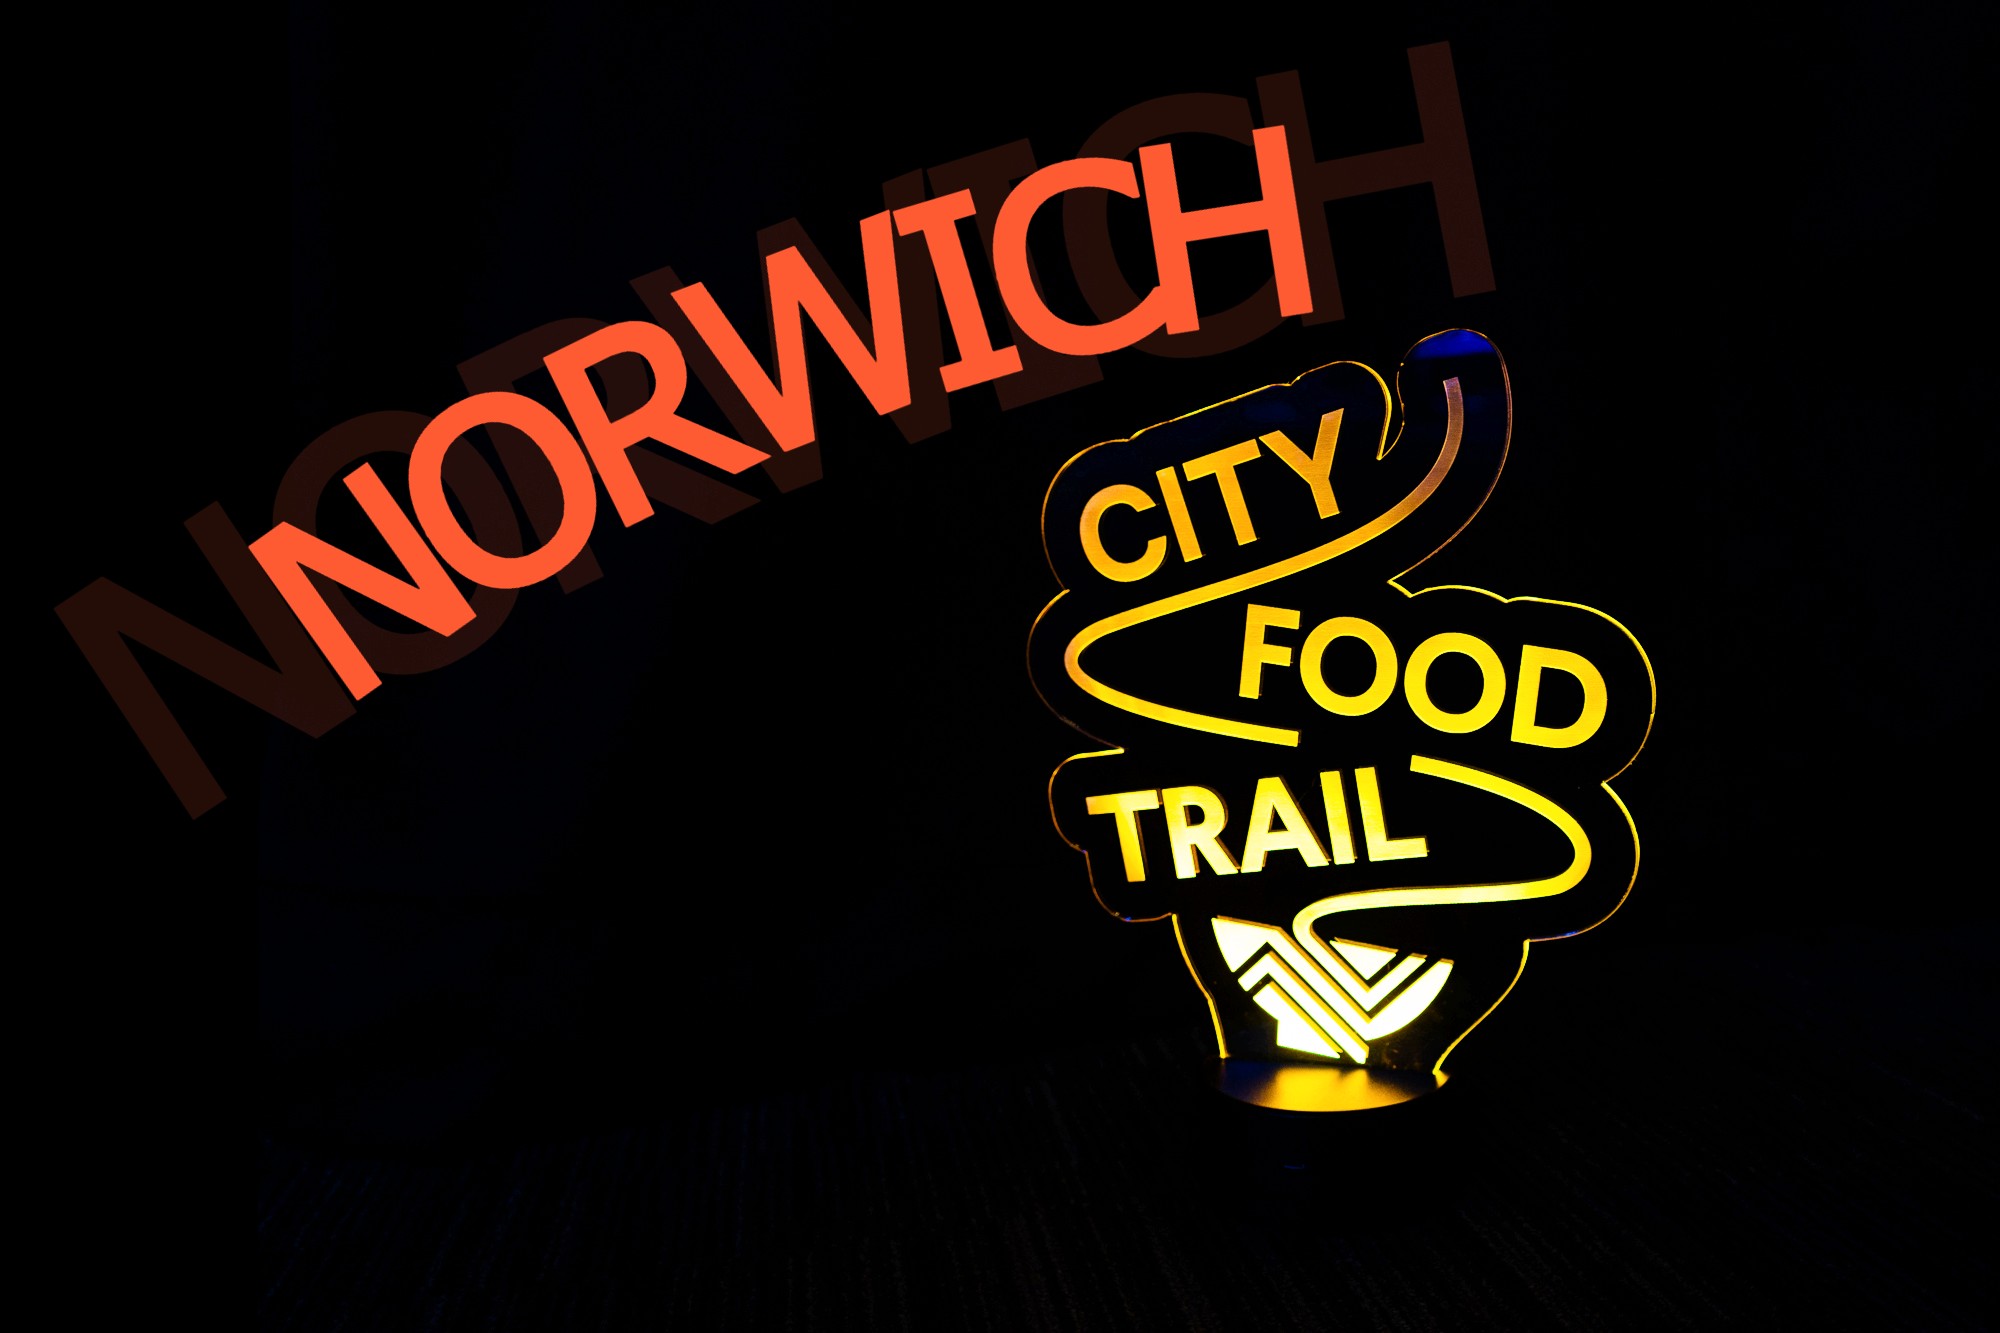 norwich city food trail